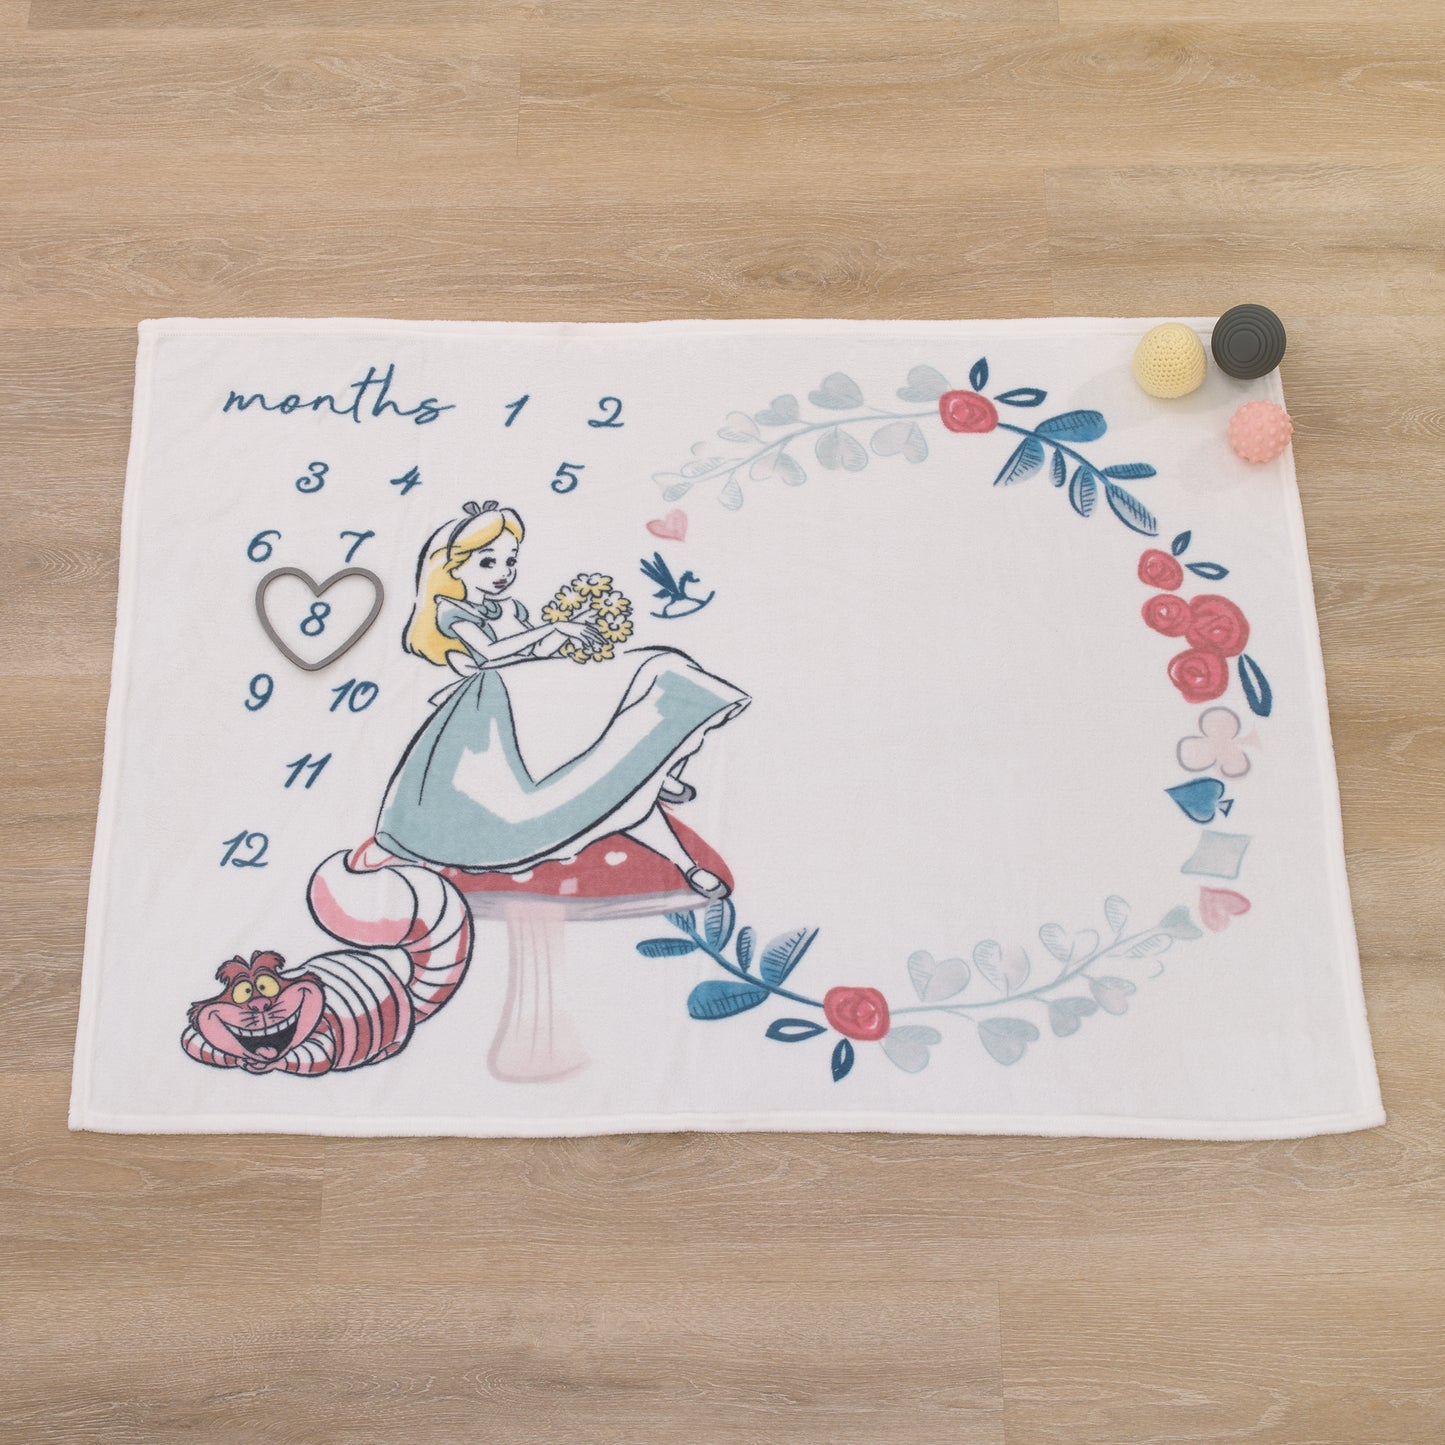 Disney Alice in Wonderland White, Pink, and Blue Cheshire Cat Super Soft Photo Op Milestone Baby Blanket